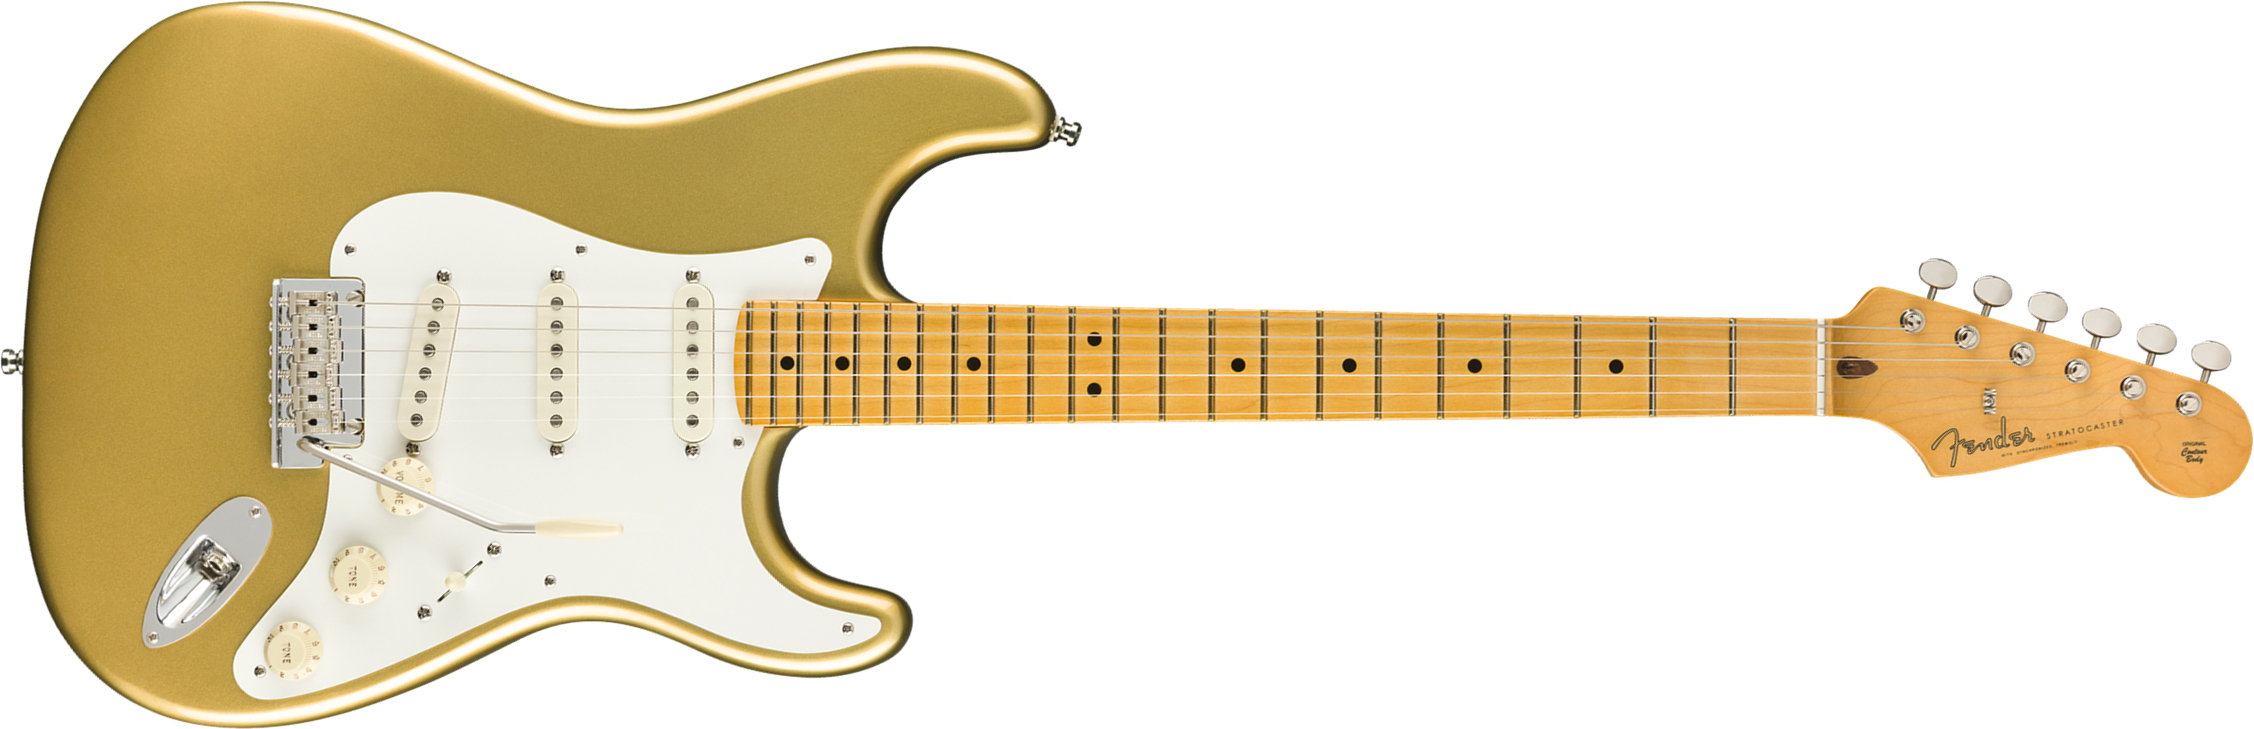 Fender Strat Lincoln Brewster Usa Signature Mn - Aztec Gold - E-Gitarre in Str-Form - Main picture